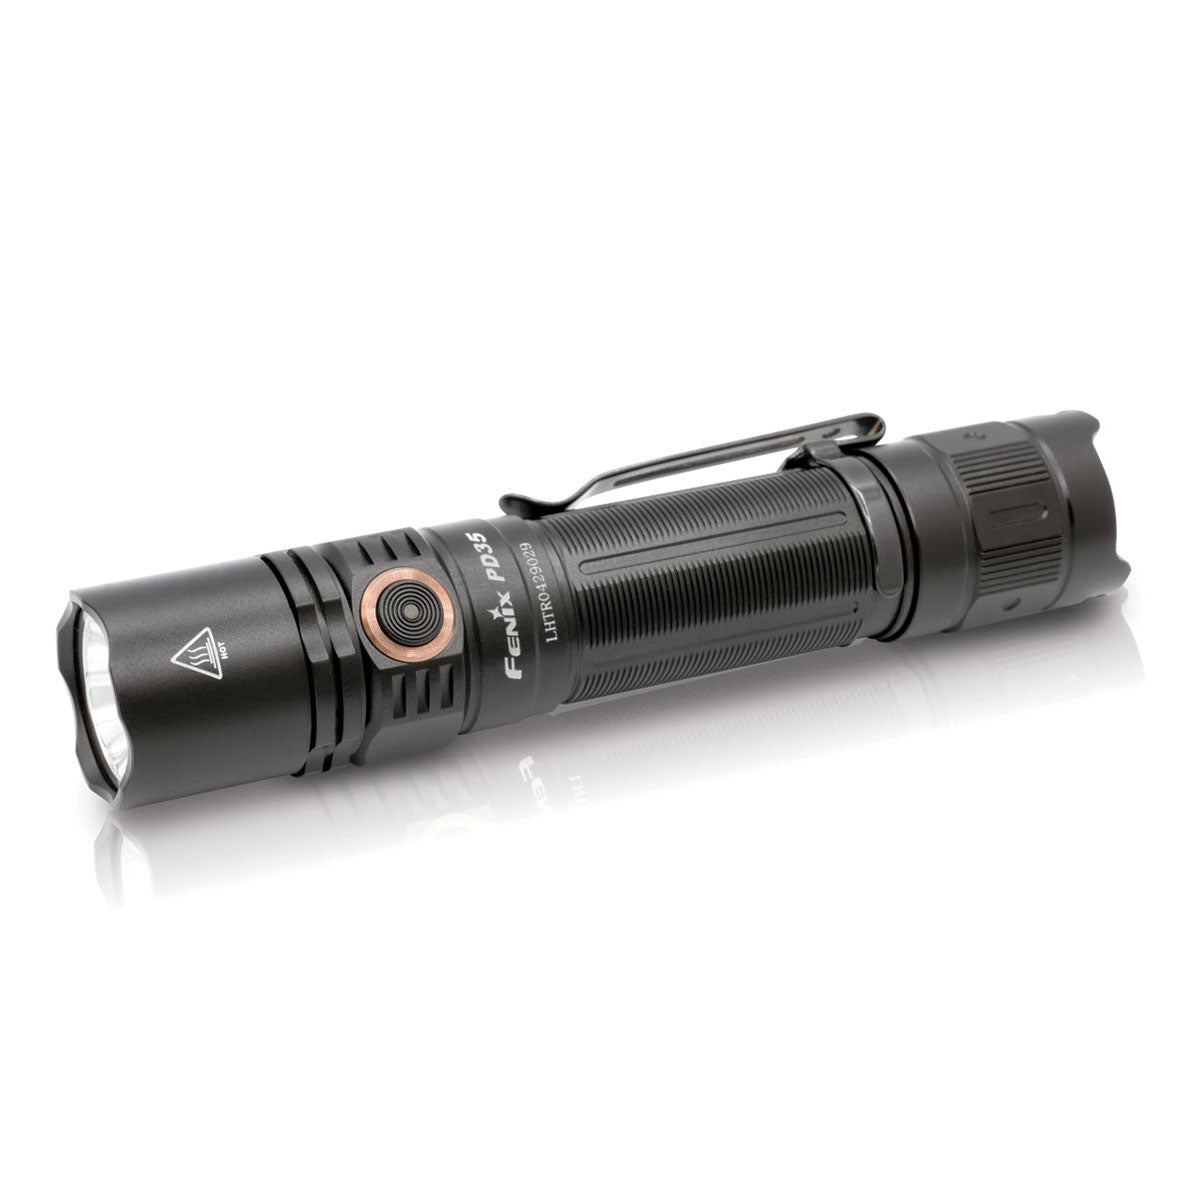 Fenix PD35 V3 1700 Lumens LED Flashlight Flashlights and Lighting Fenix Tactical Gear Supplier Tactical Distributors Australia